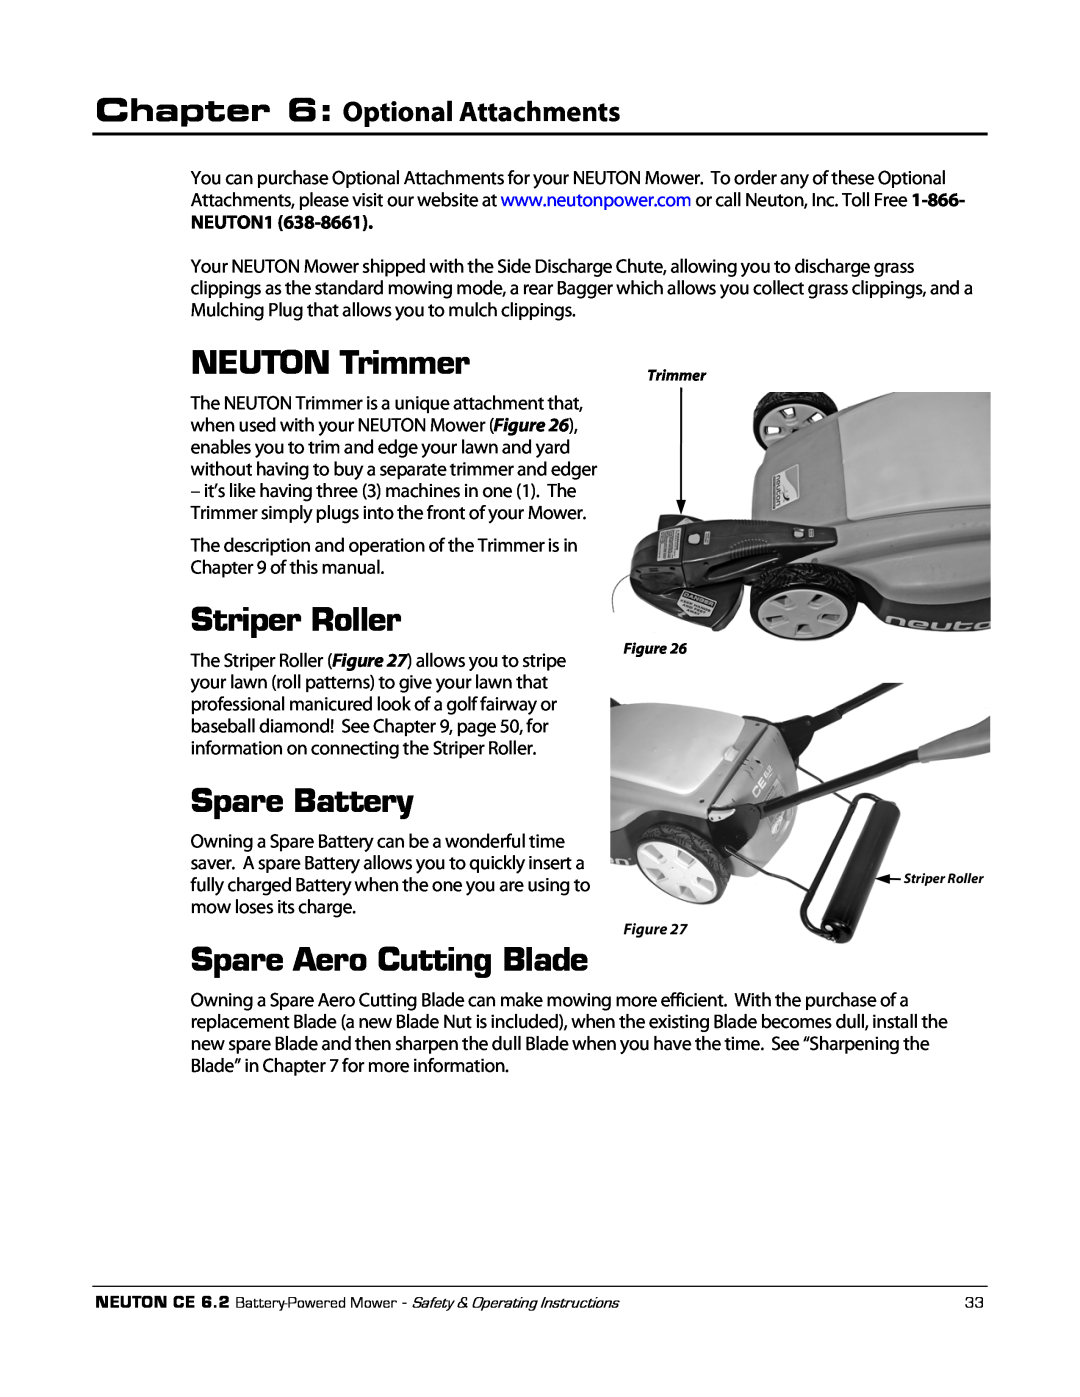 Neuton CE 6.2 manual NEUTON Trimmer, Striper Roller, Spare Battery, Spare Aero Cutting Blade, Optional Attachments 